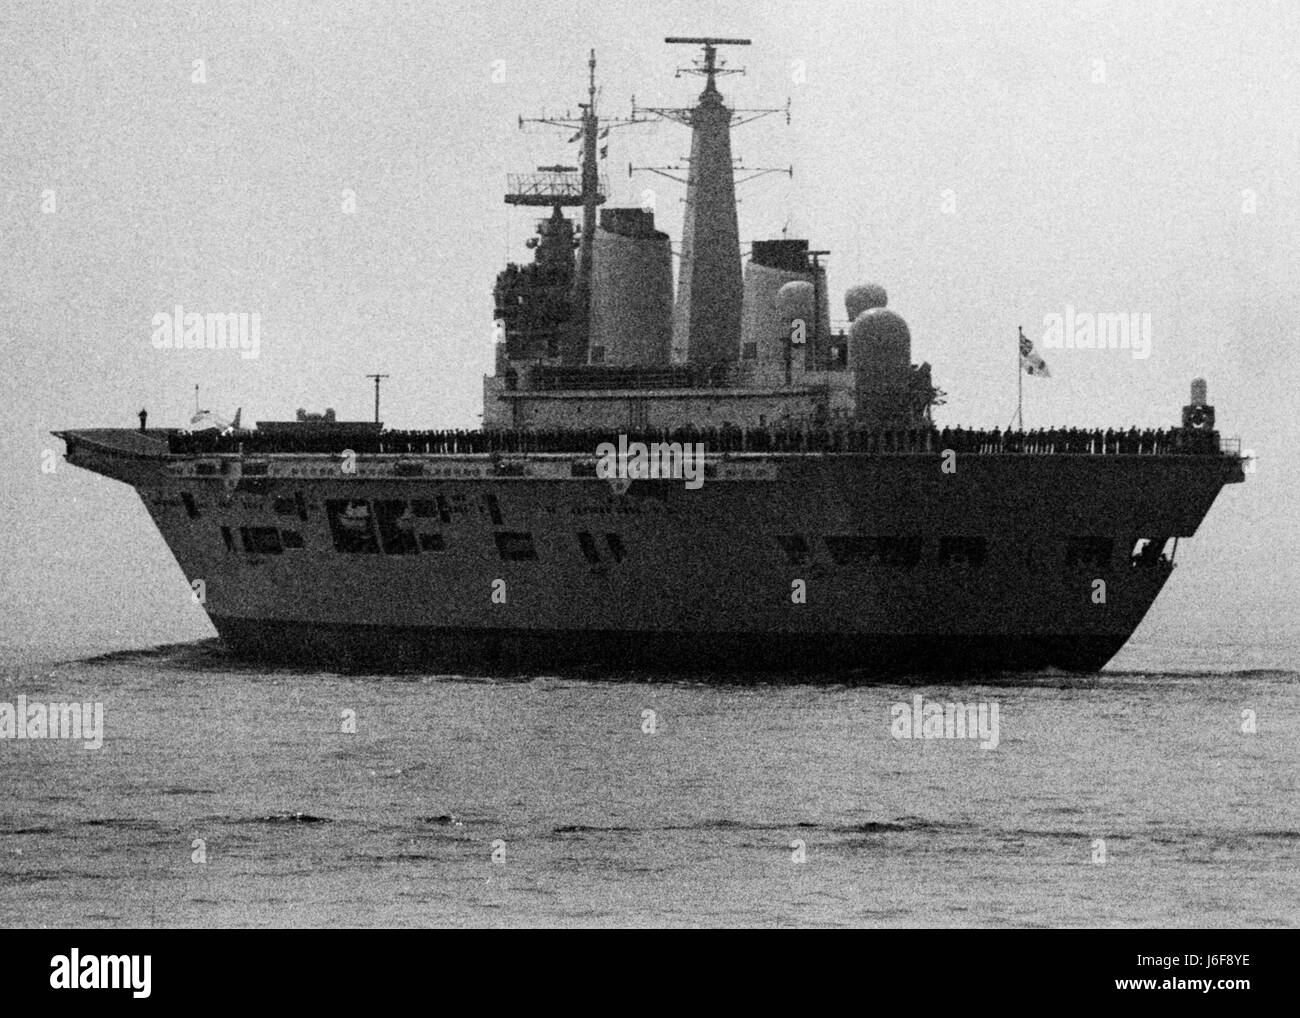 AJAXNETPHOTO. 1982. PORTSMOUTH, ENGLAND - FALKLAND ISLANDS DEPARTURE. HMS ILLUSTRIOUS SAILS FOR THE SOUTH ATLANTIC PHOTO:JONATHAN EASTLAND/AJAX REF:820802 18 Stock Photo